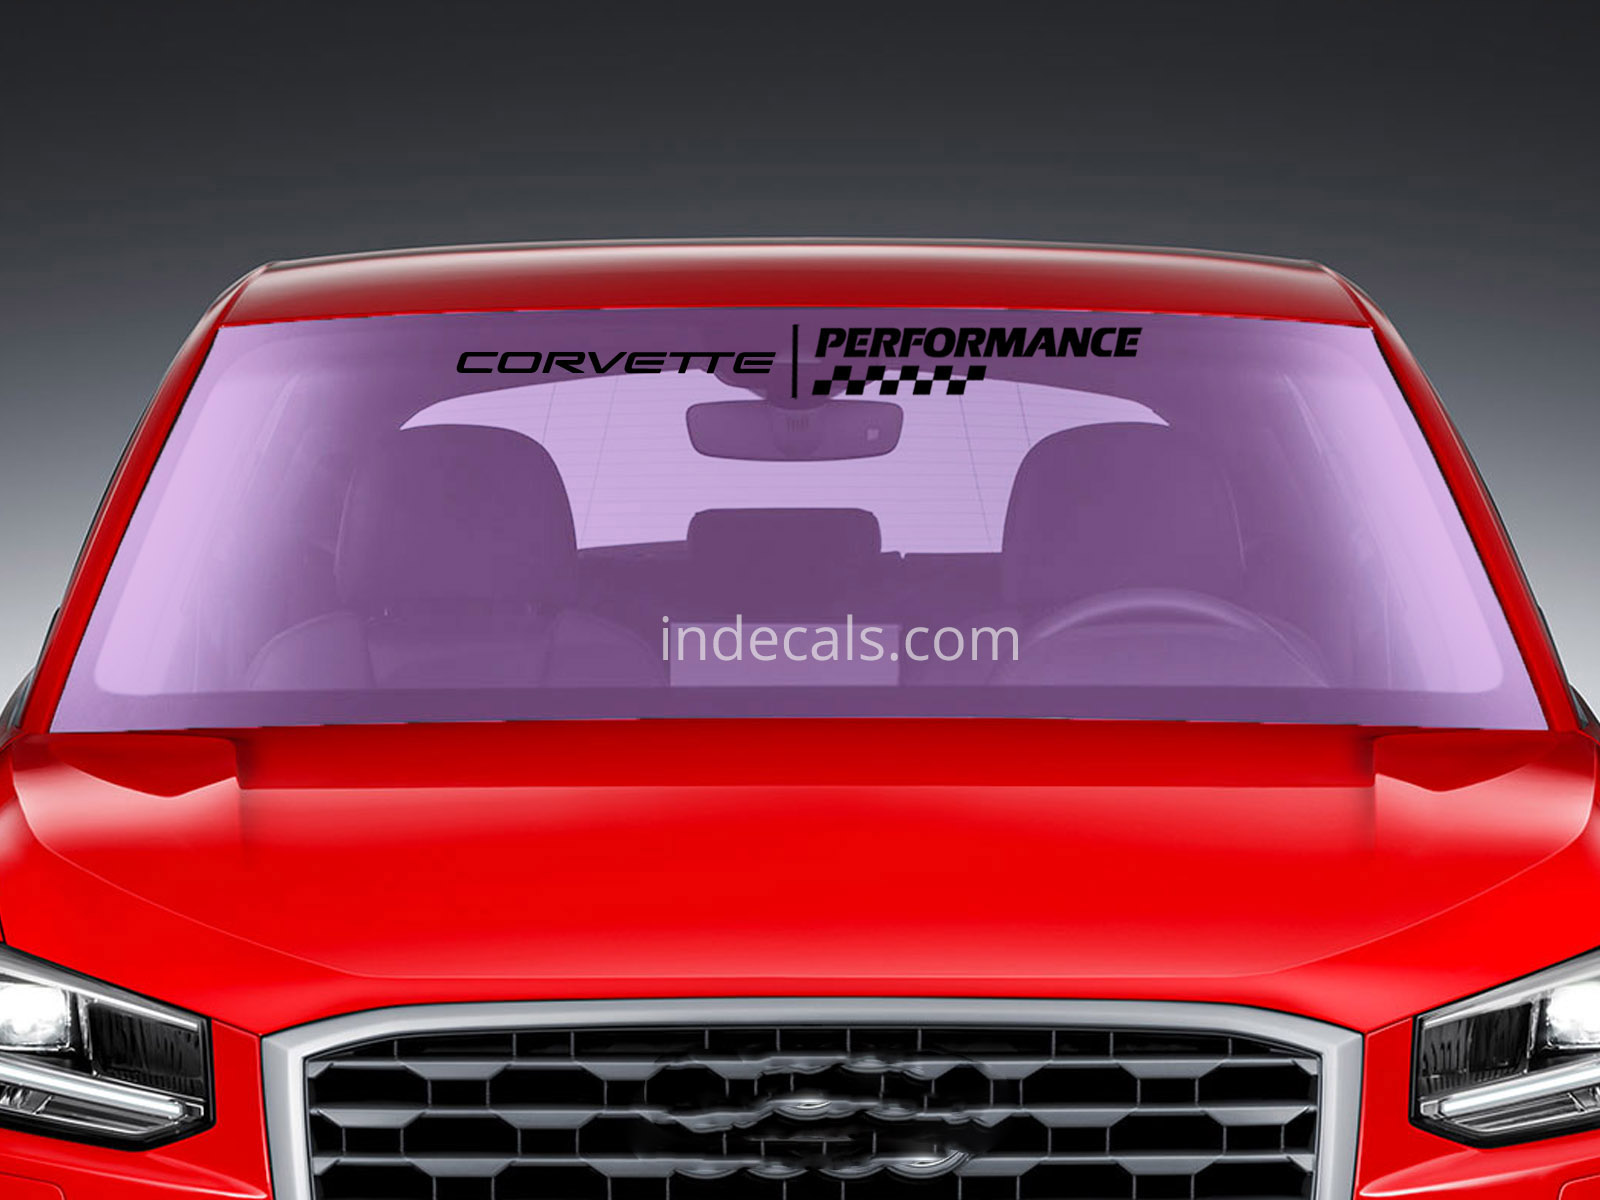 1 x Corvette Performance Sticker for Windshield or Back Window - Black